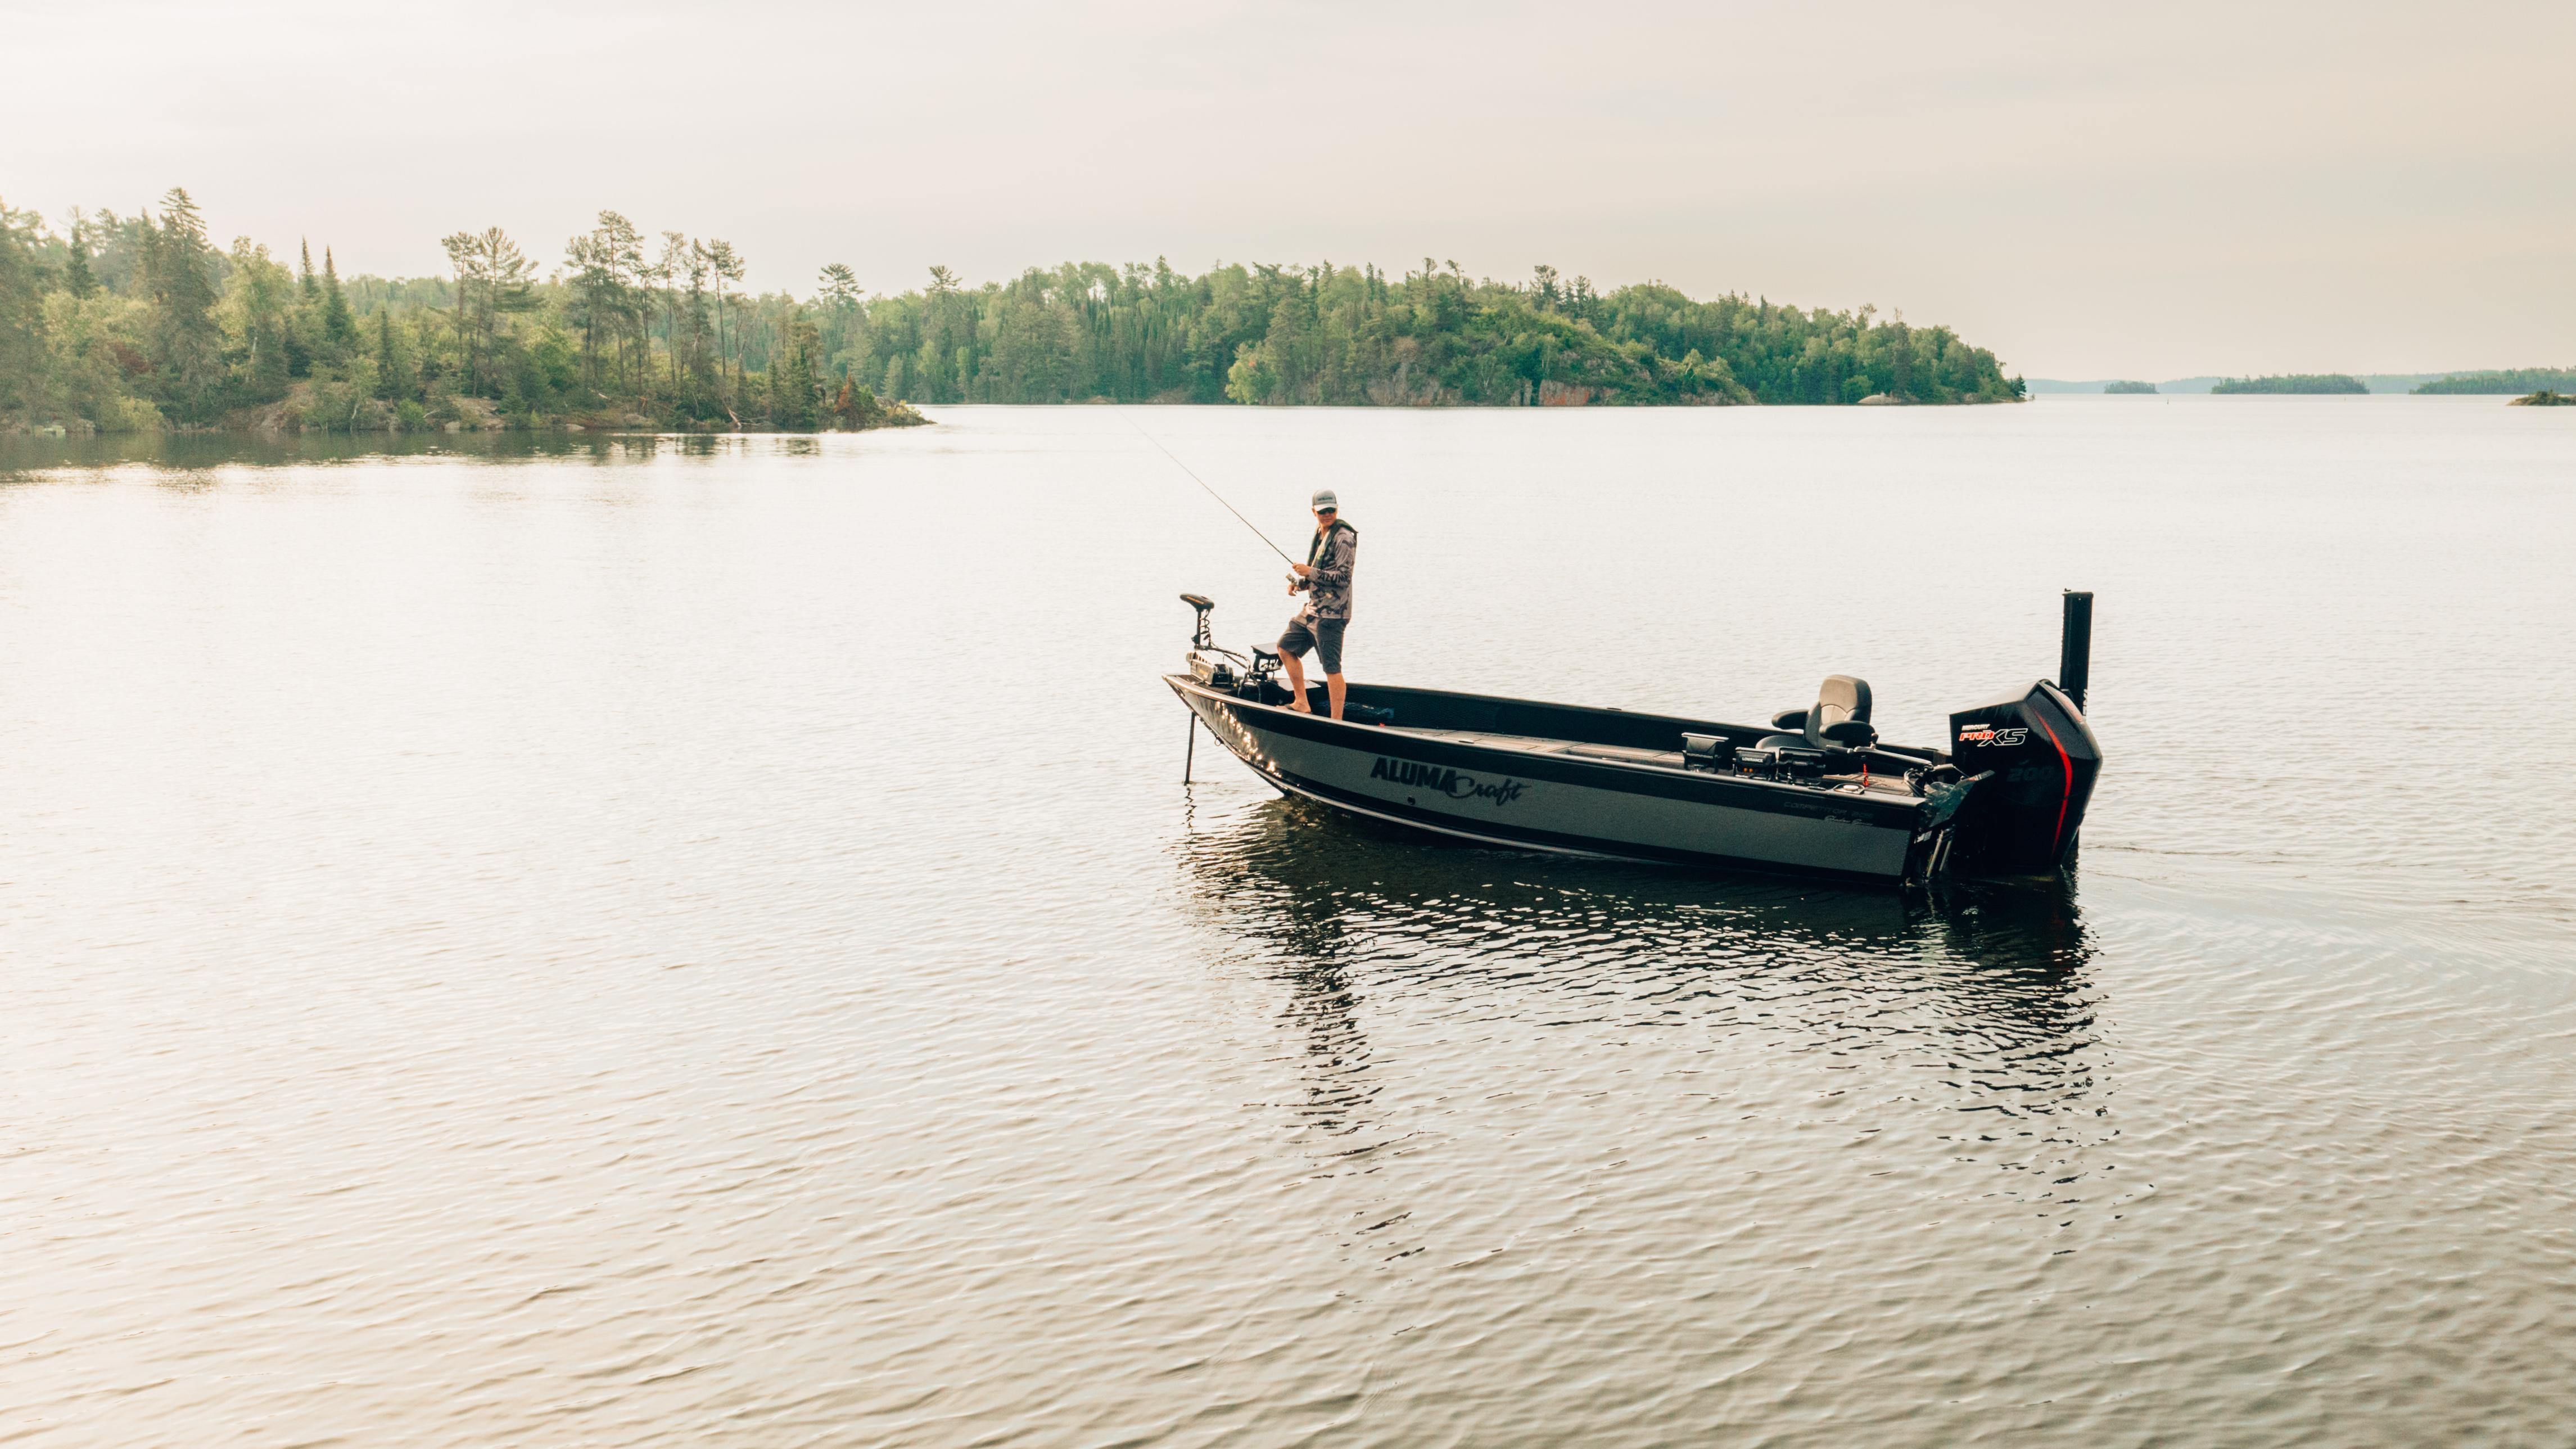 Jay Siemens fishing from his Alumacraft on lake 